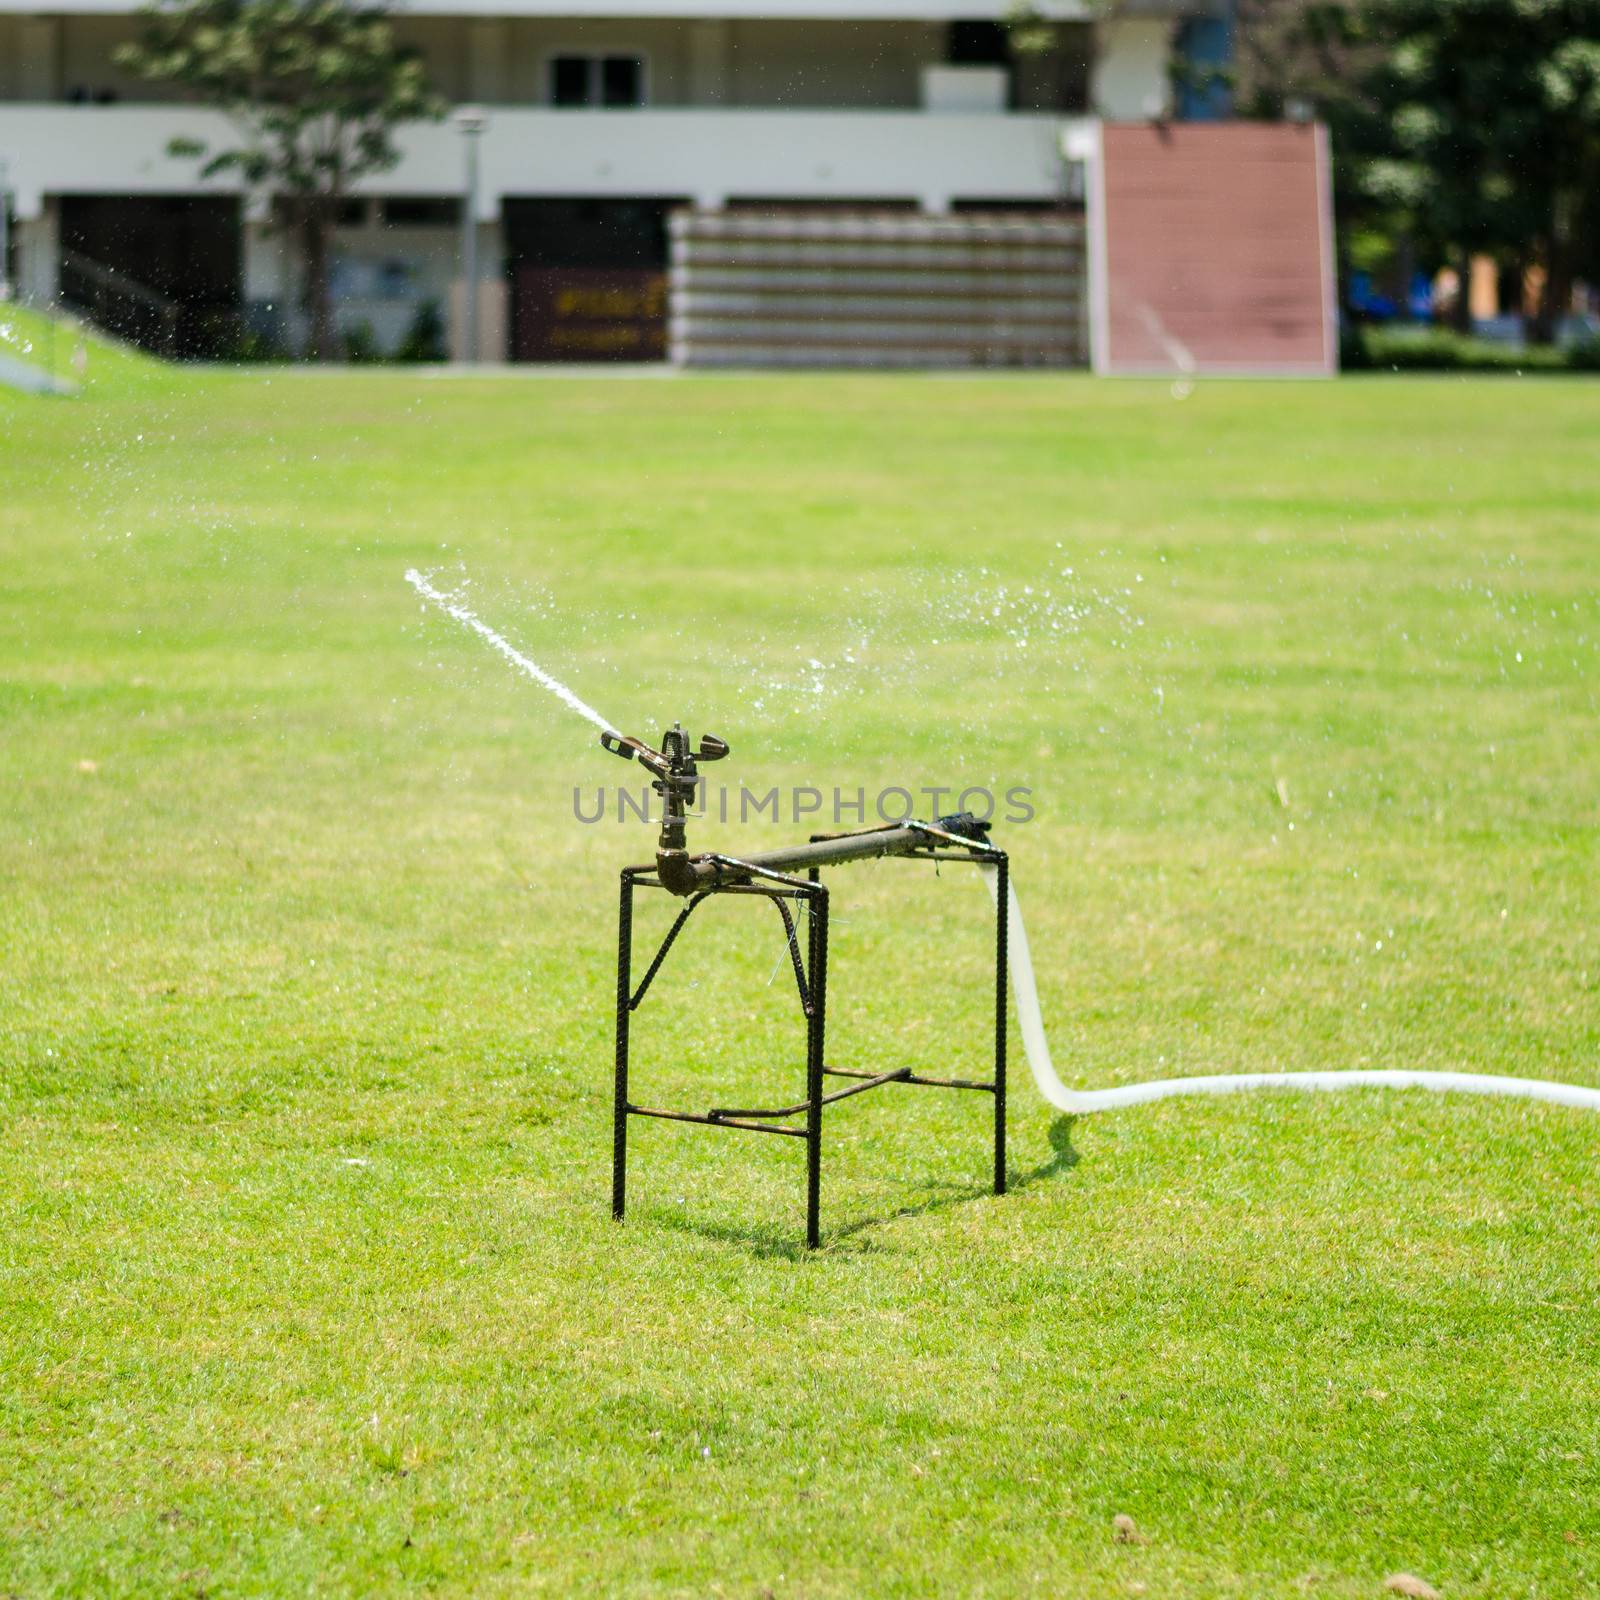 watering in football field on day